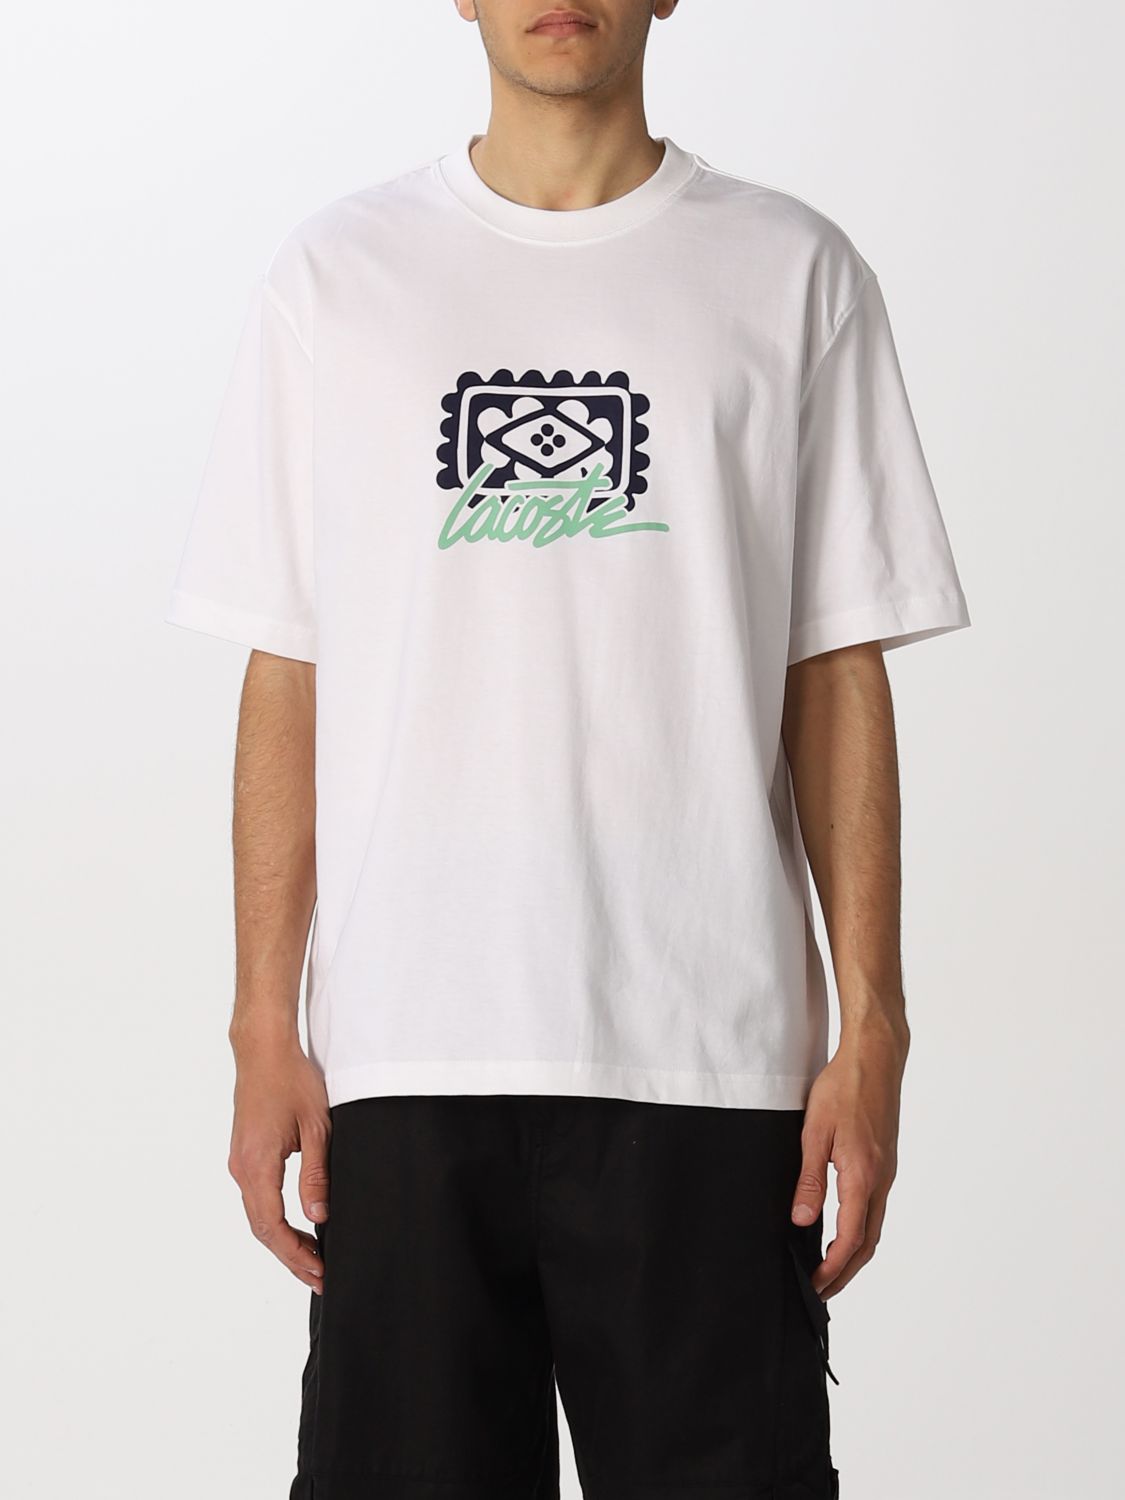 Camiseta Lacoste L!Ve: Camiseta hombre Lacoste L!ve blanco 1